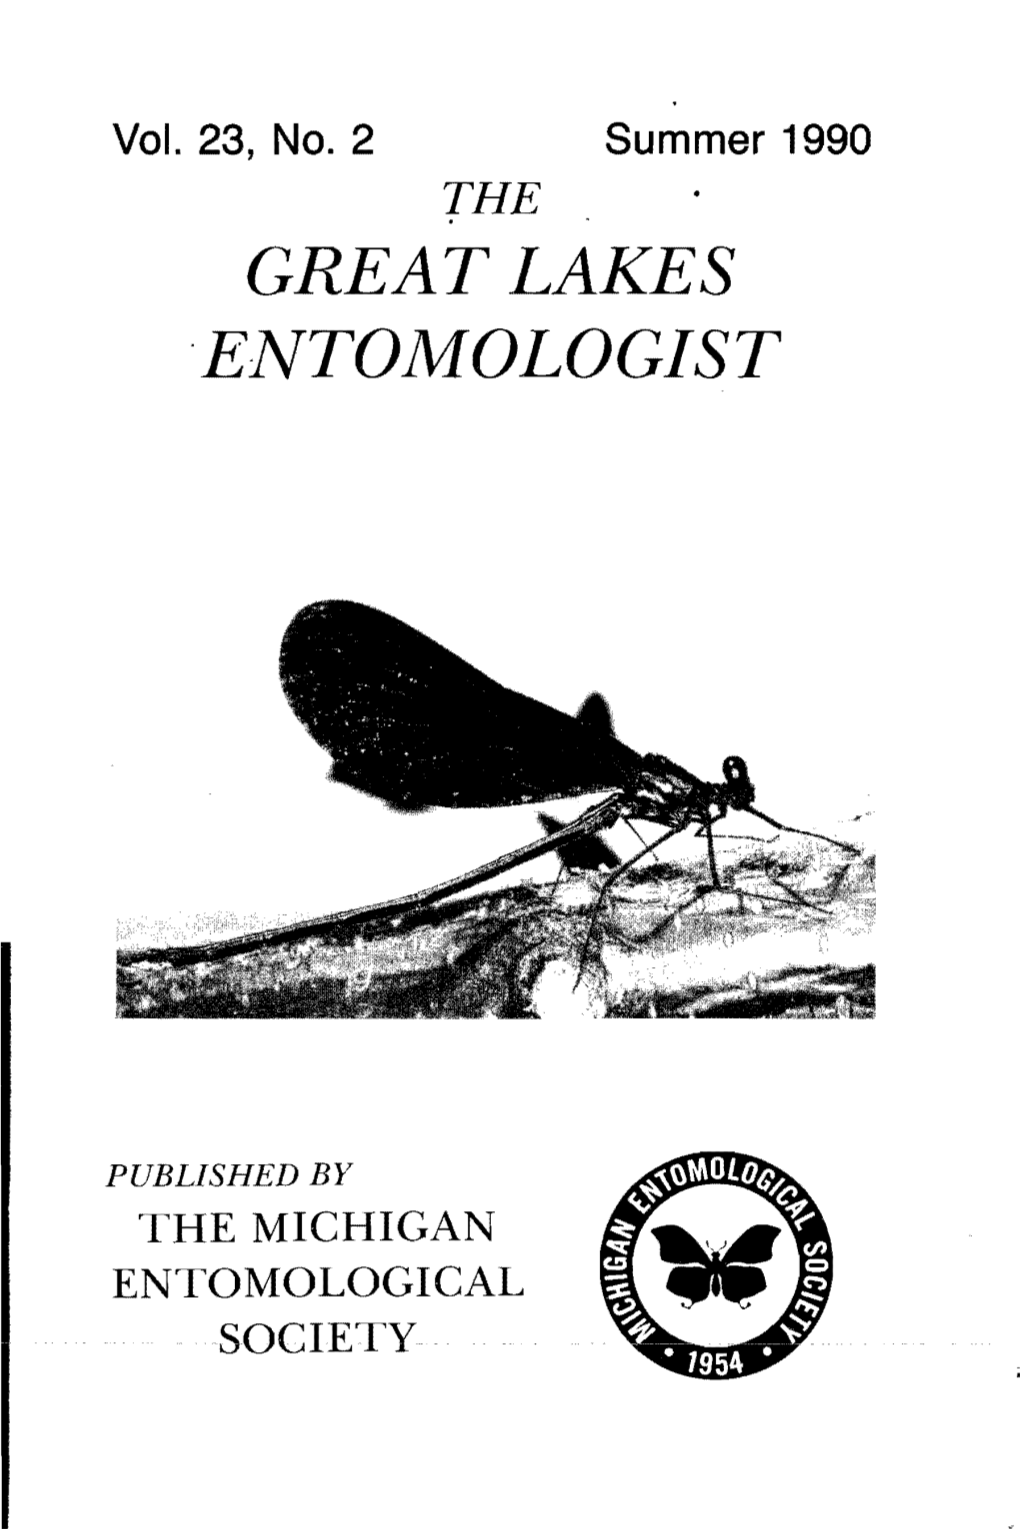 Great Lakes 'Entomologist